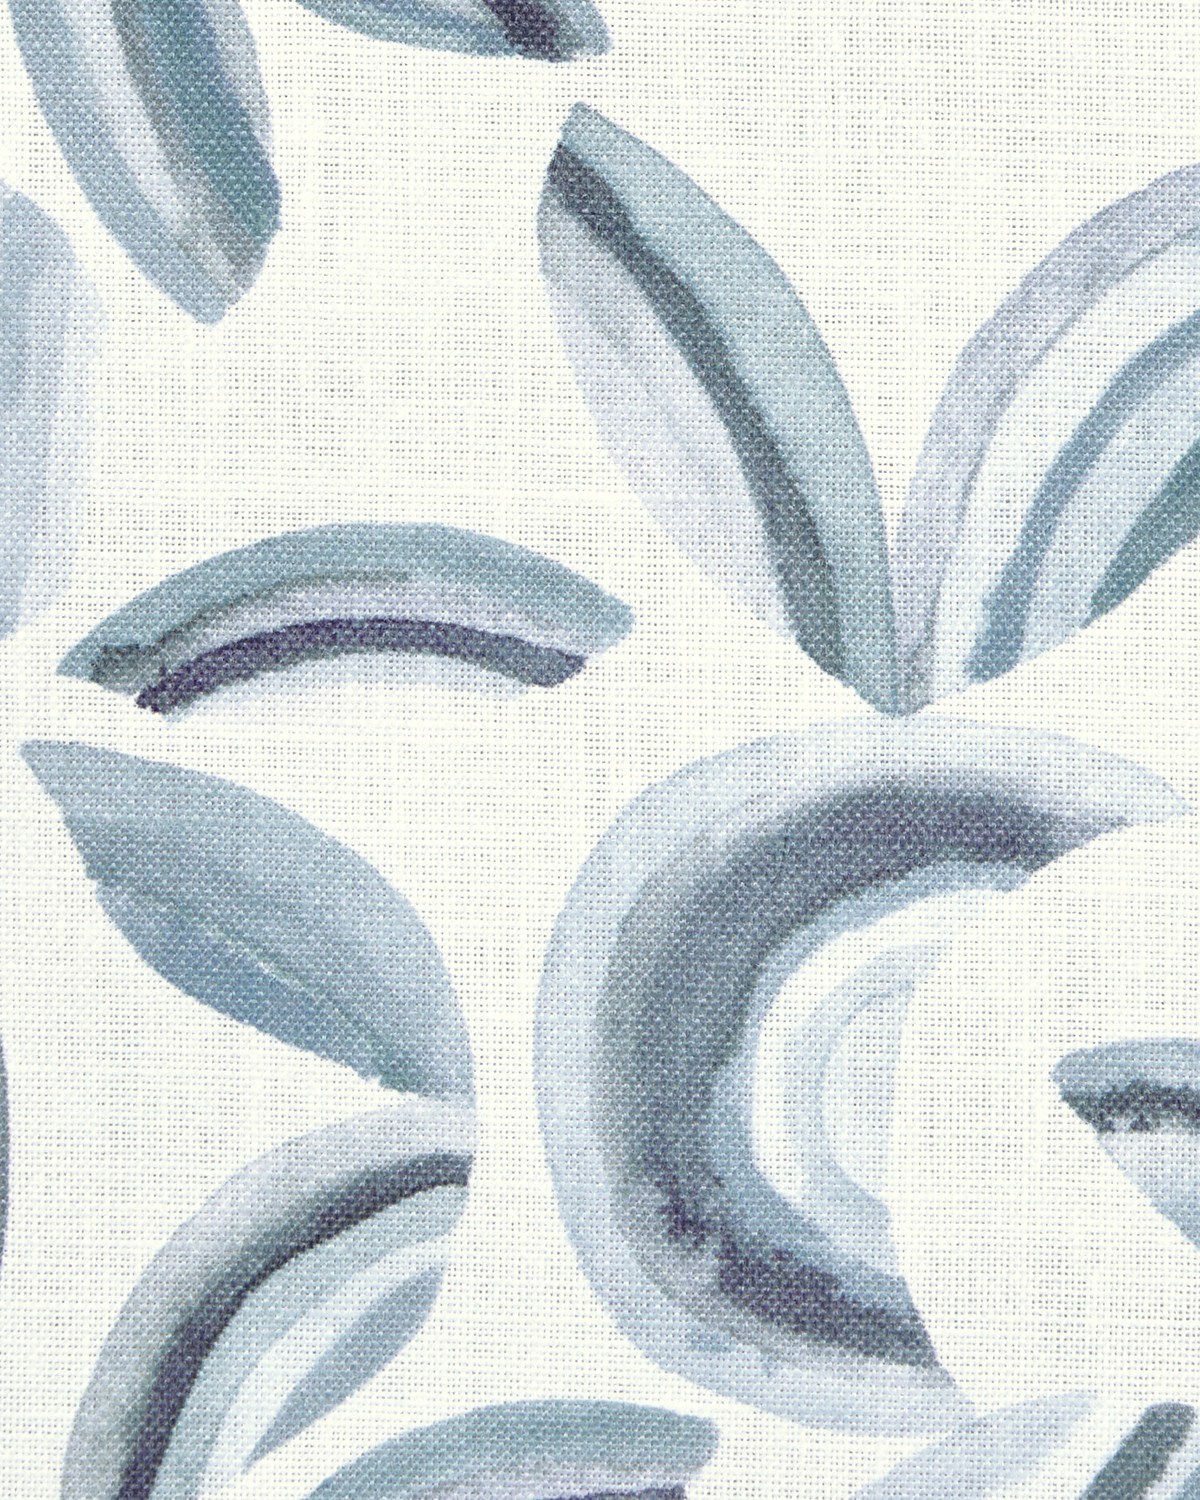 Striped Garden Fabric in Gray-Lilac